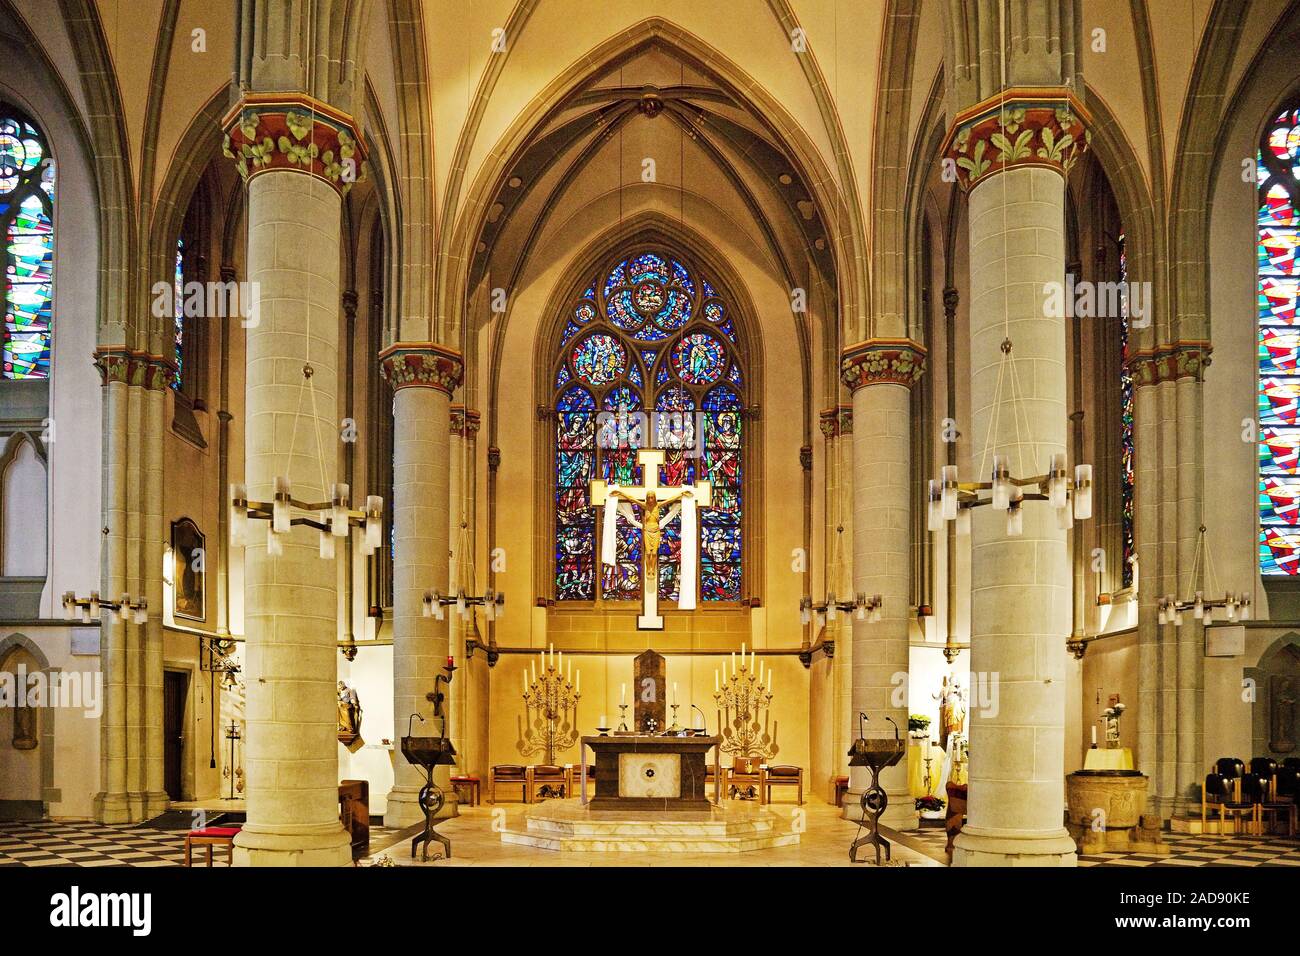 Inside view of the Propsteikirche St. Gertrud of Brabant, Wattenscheid, Bochum, Germany, Europe Stock Photo